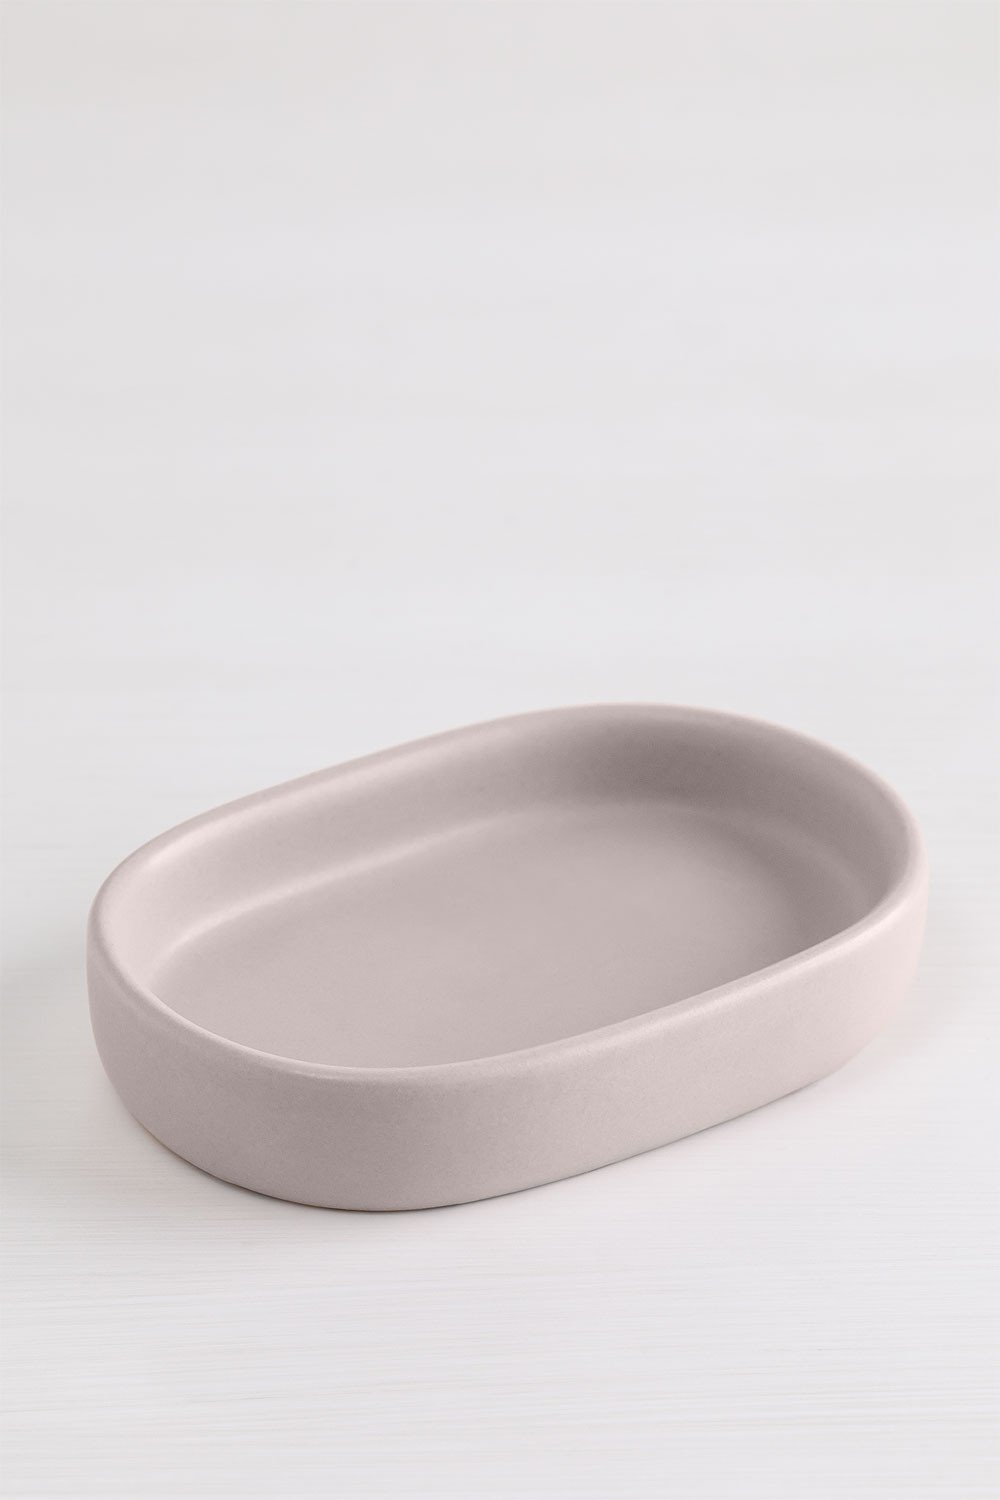 Porte-savon en céramique Pierk, image de la galerie 1